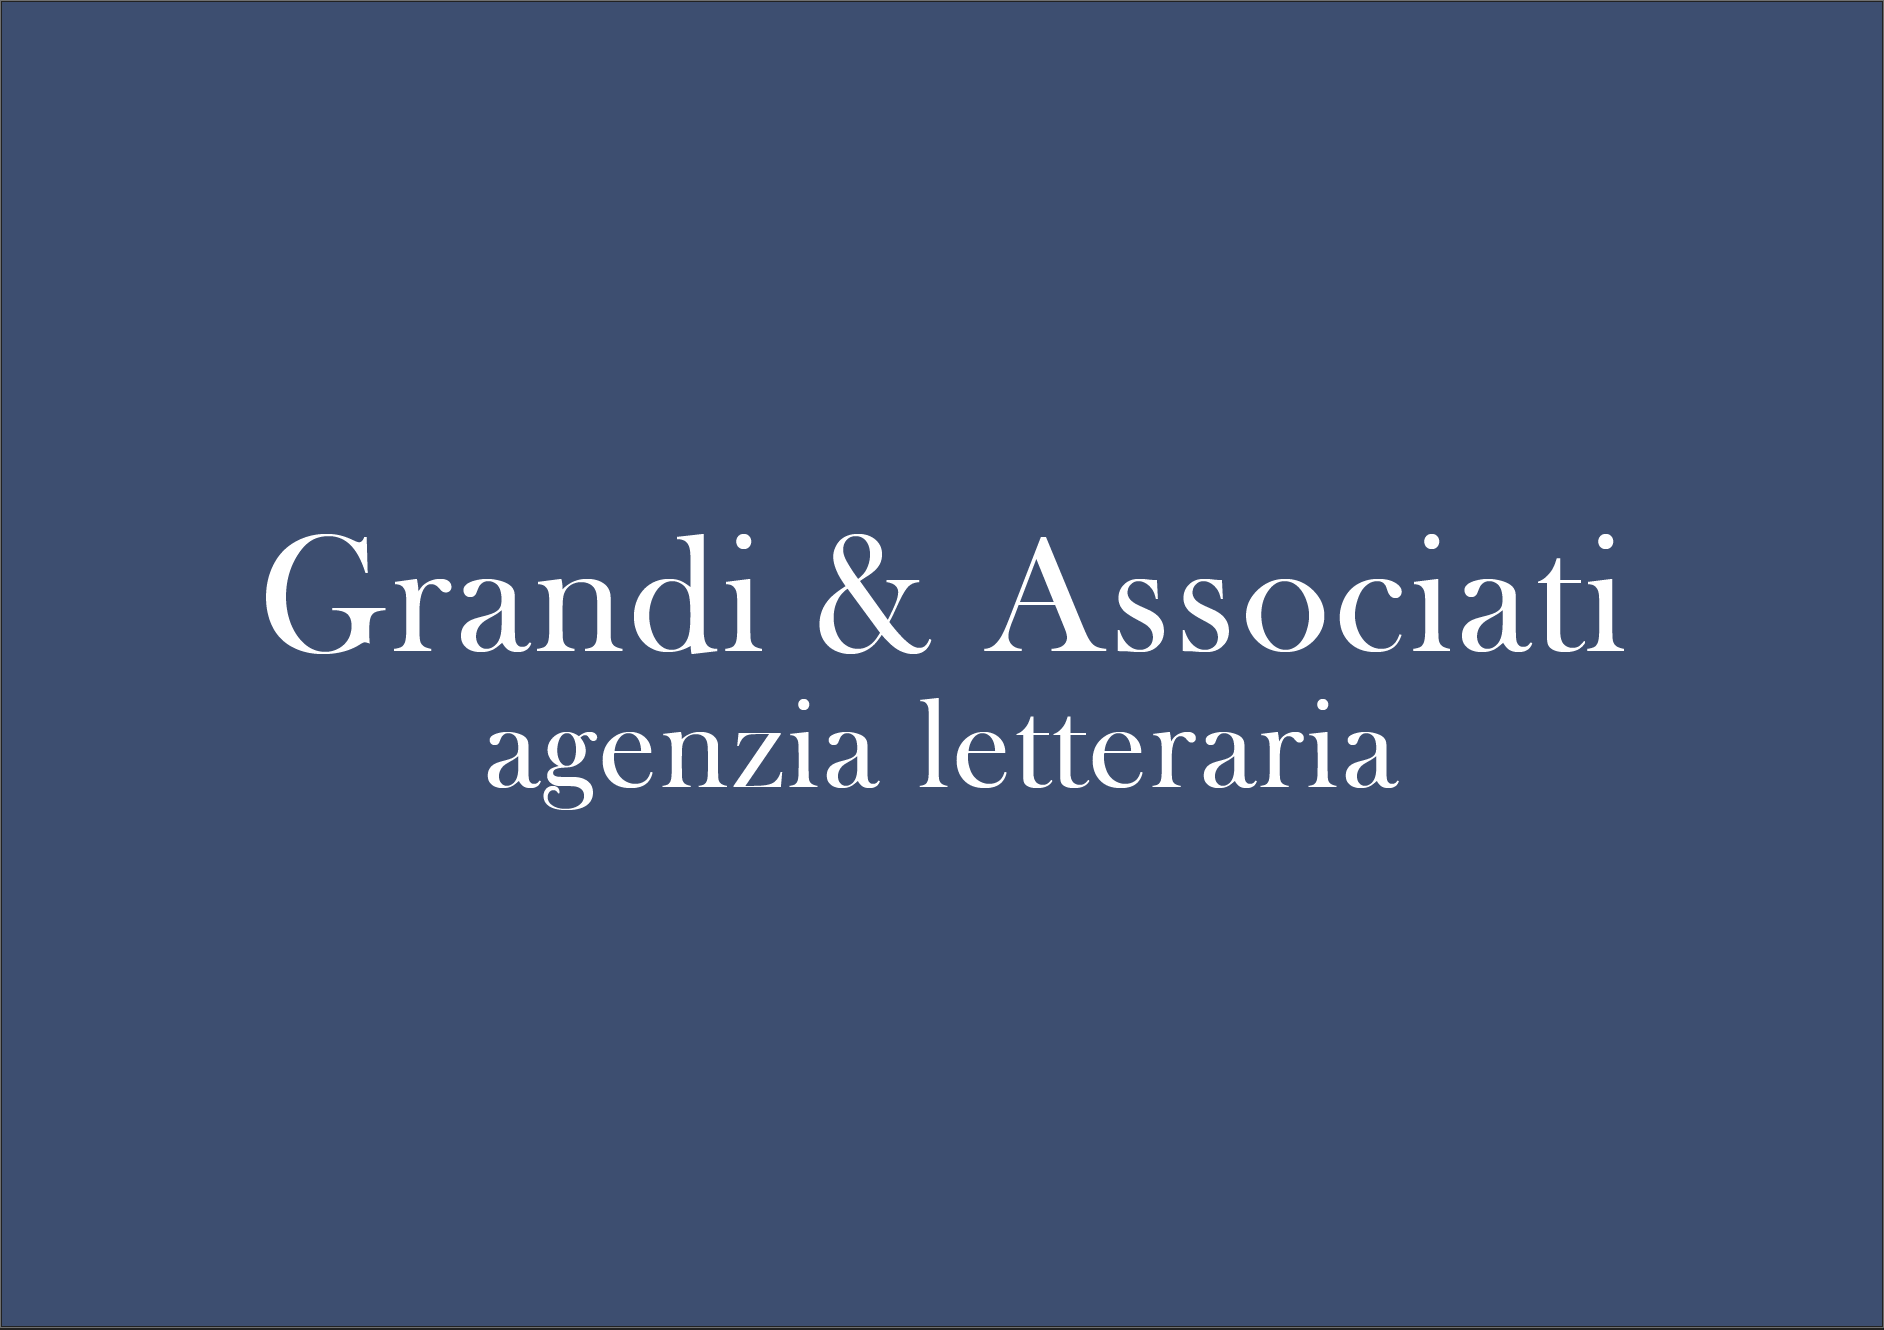 Frances Goldin Literary Agency, Inc